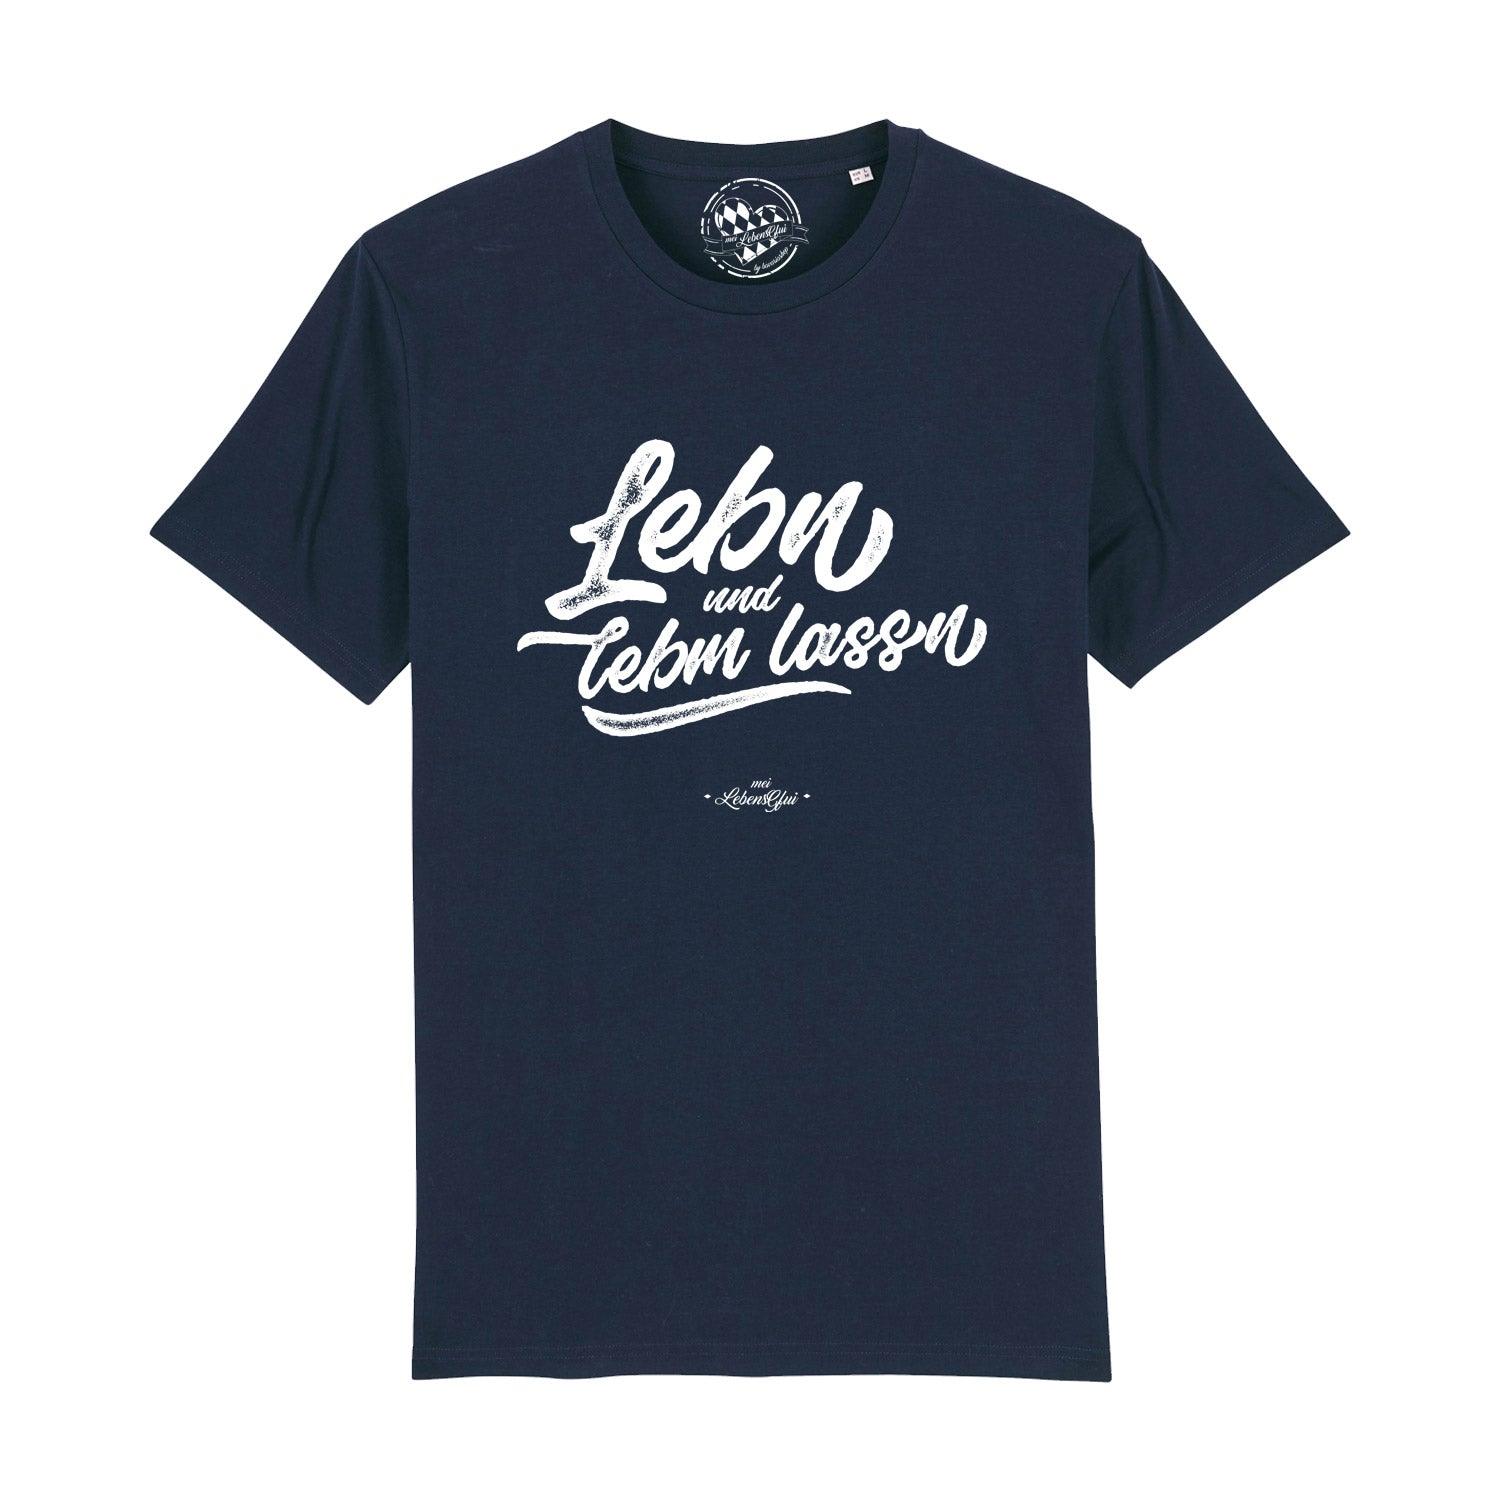 Herren T-Shirt "Lebn und lebm lassn" - bavariashop - mei LebensGfui